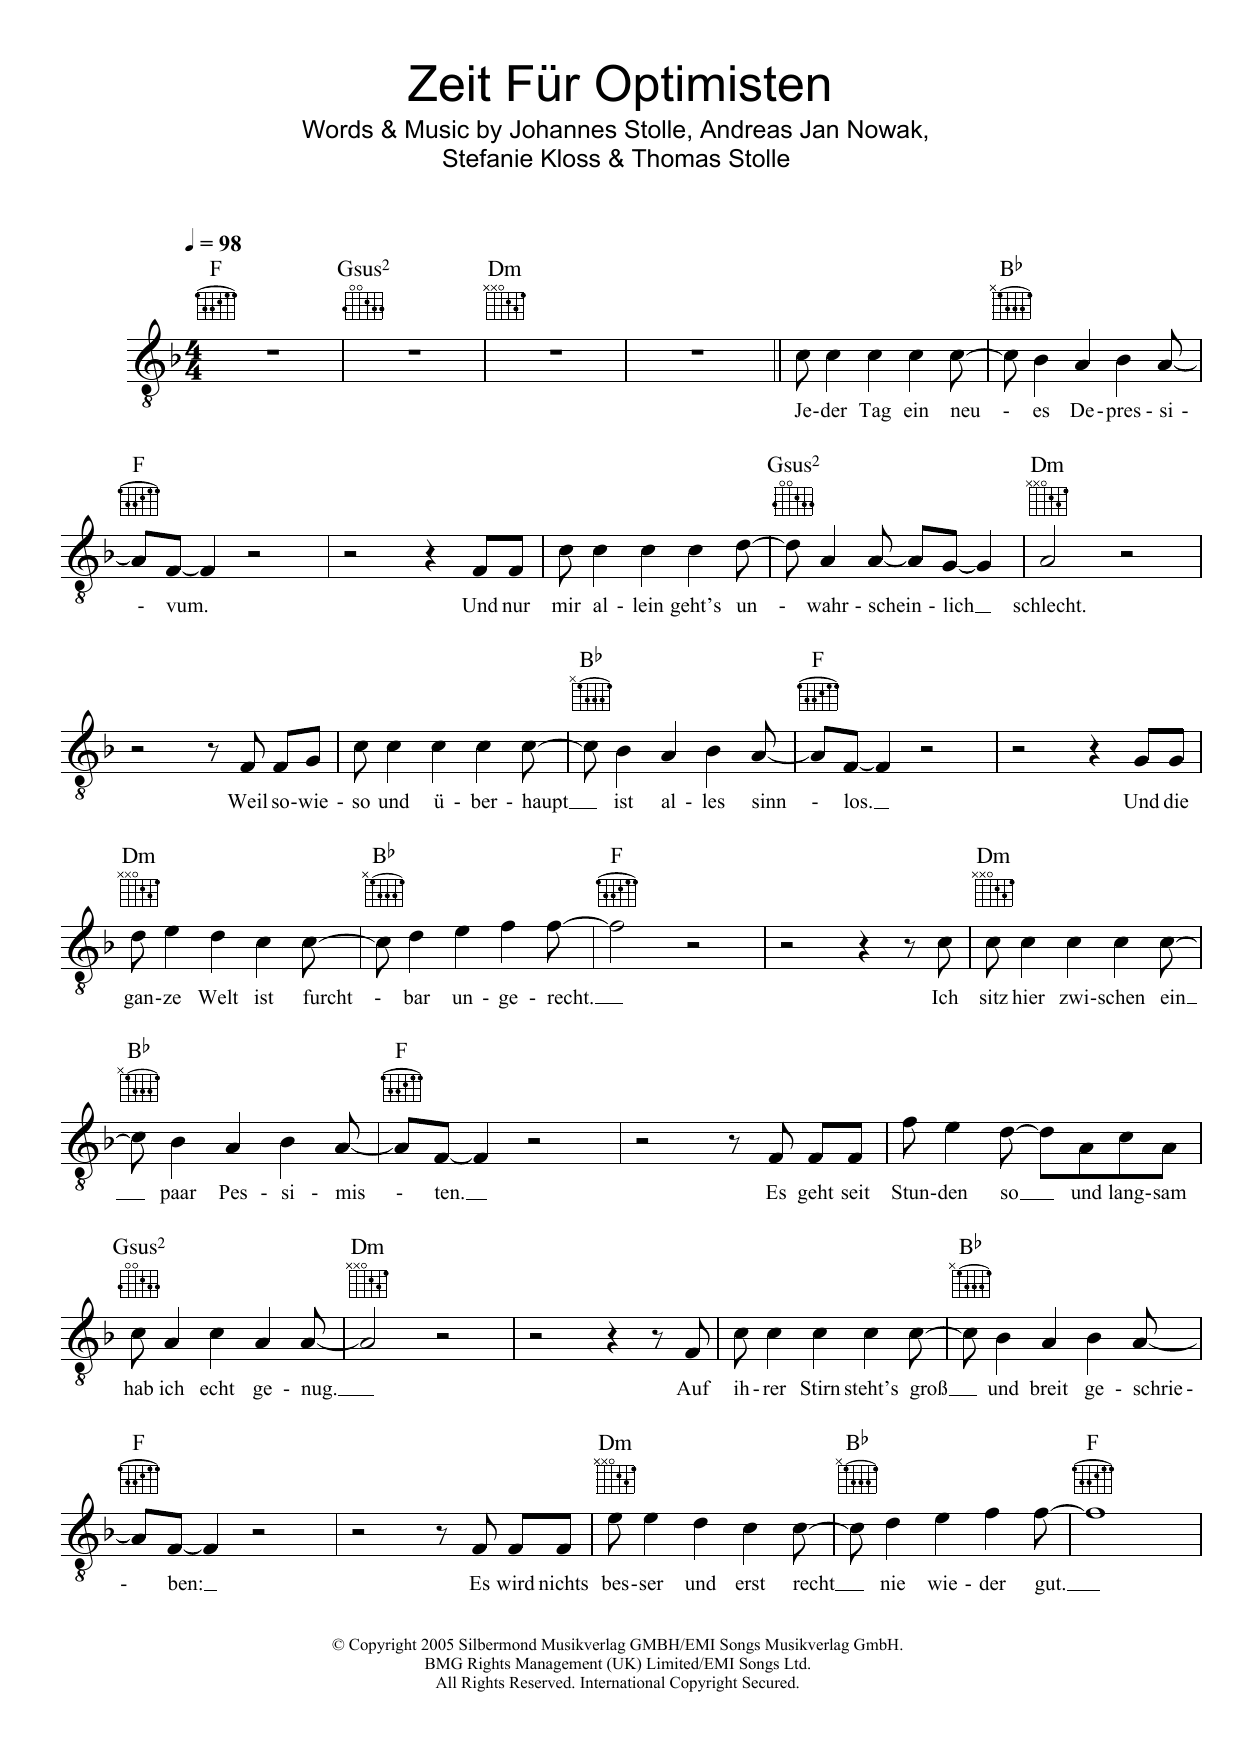 Download Silbermond Zeit Für Optimisten Sheet Music and learn how to play Melody Line, Lyrics & Chords PDF digital score in minutes